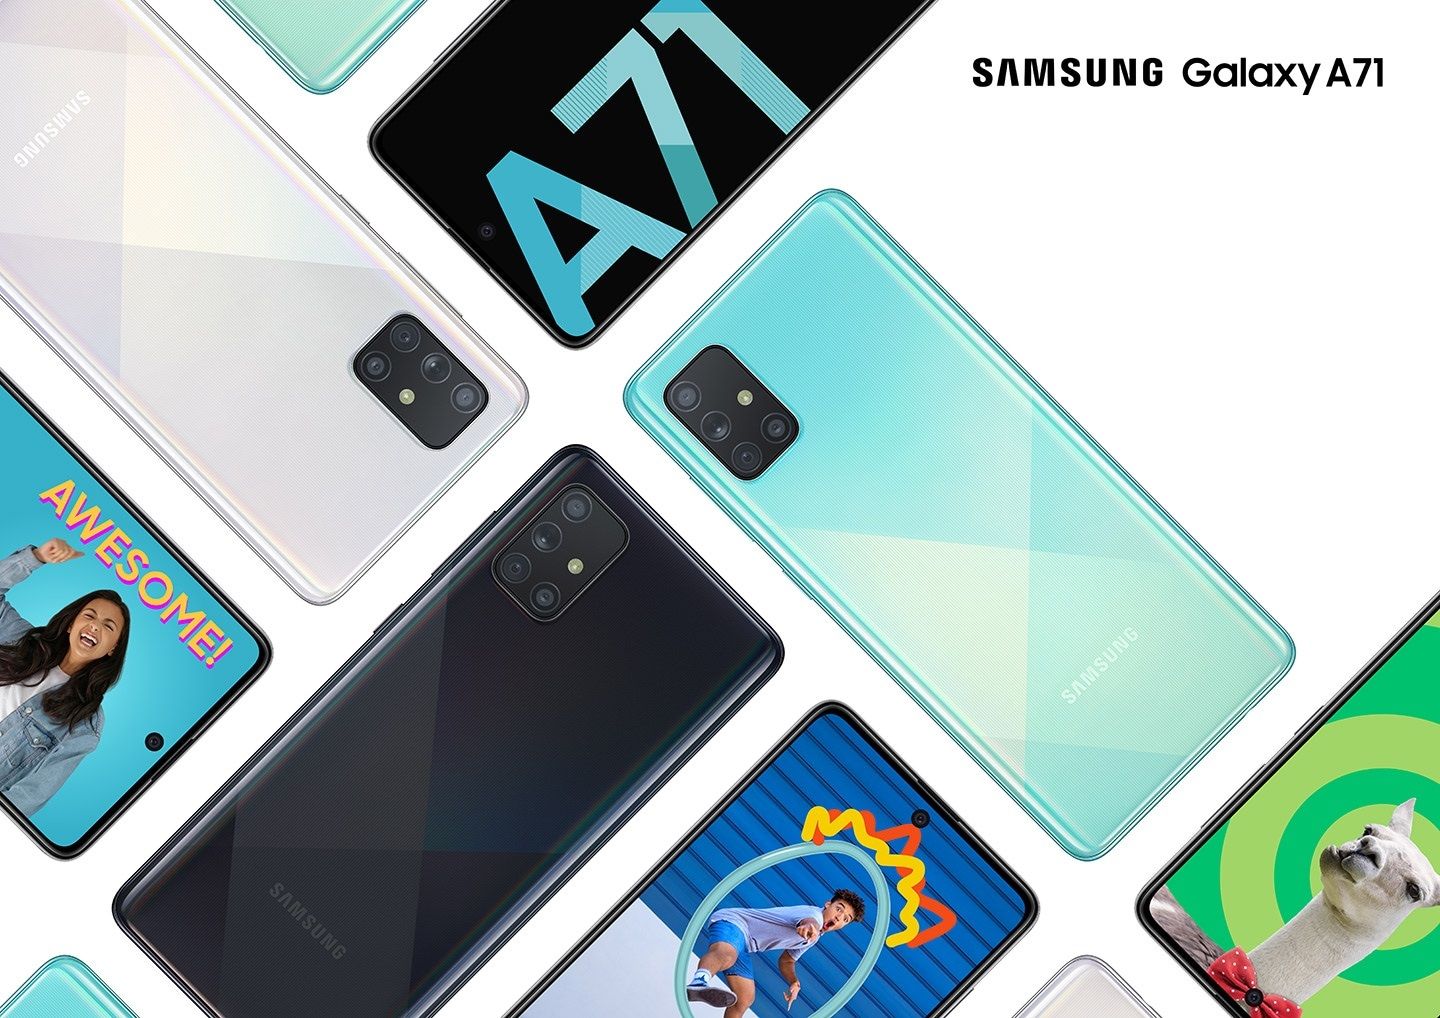 Jual Samsung Galaxy S10 Spesifikasi Terbaru 2020 Harga